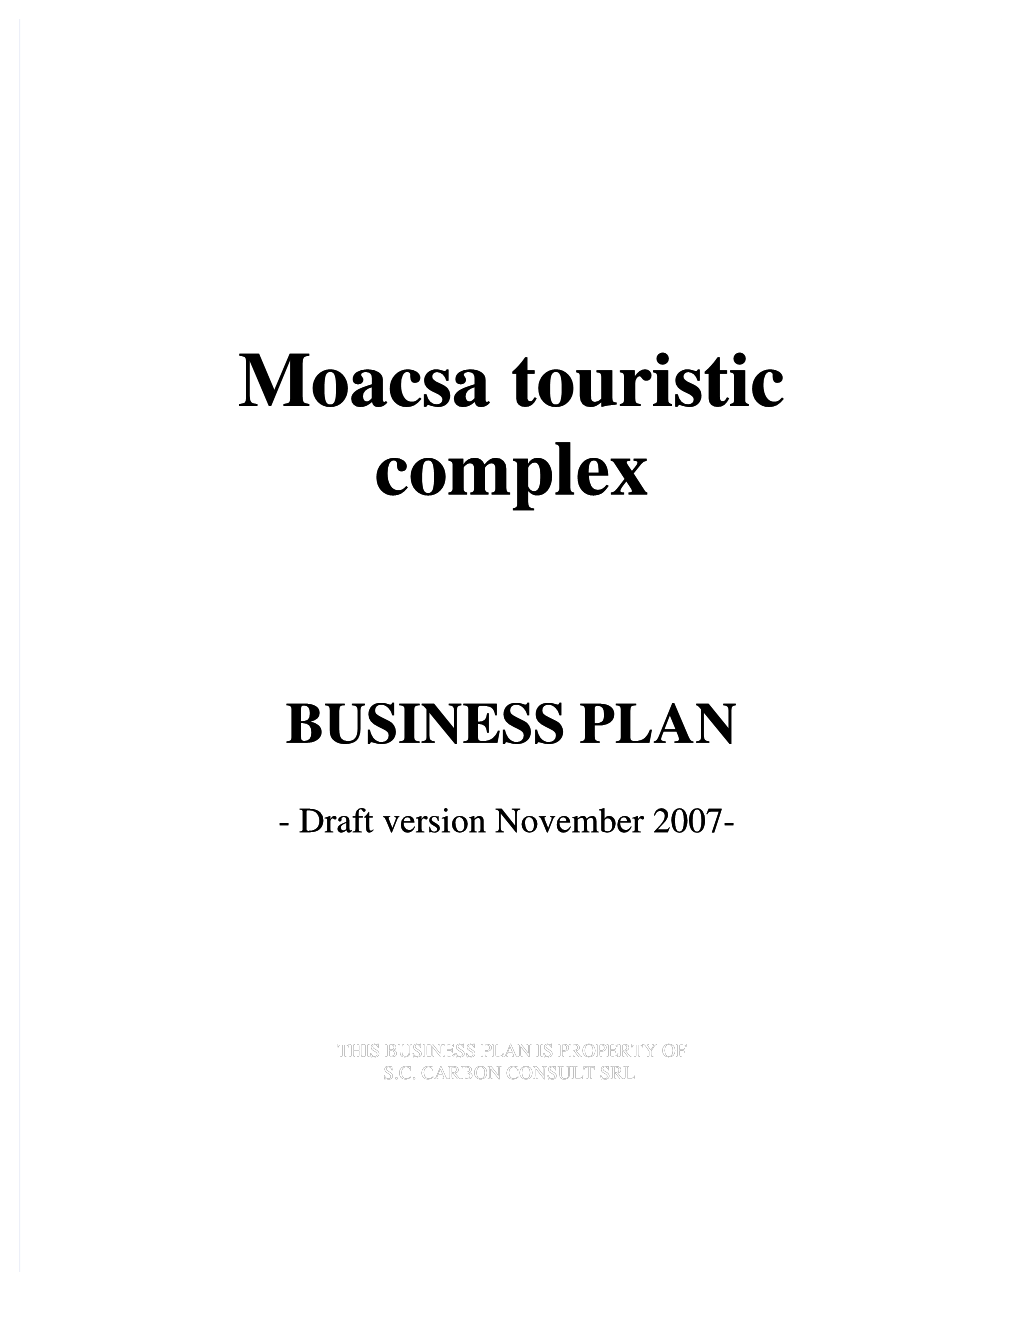 Moacsa Touristic Complex